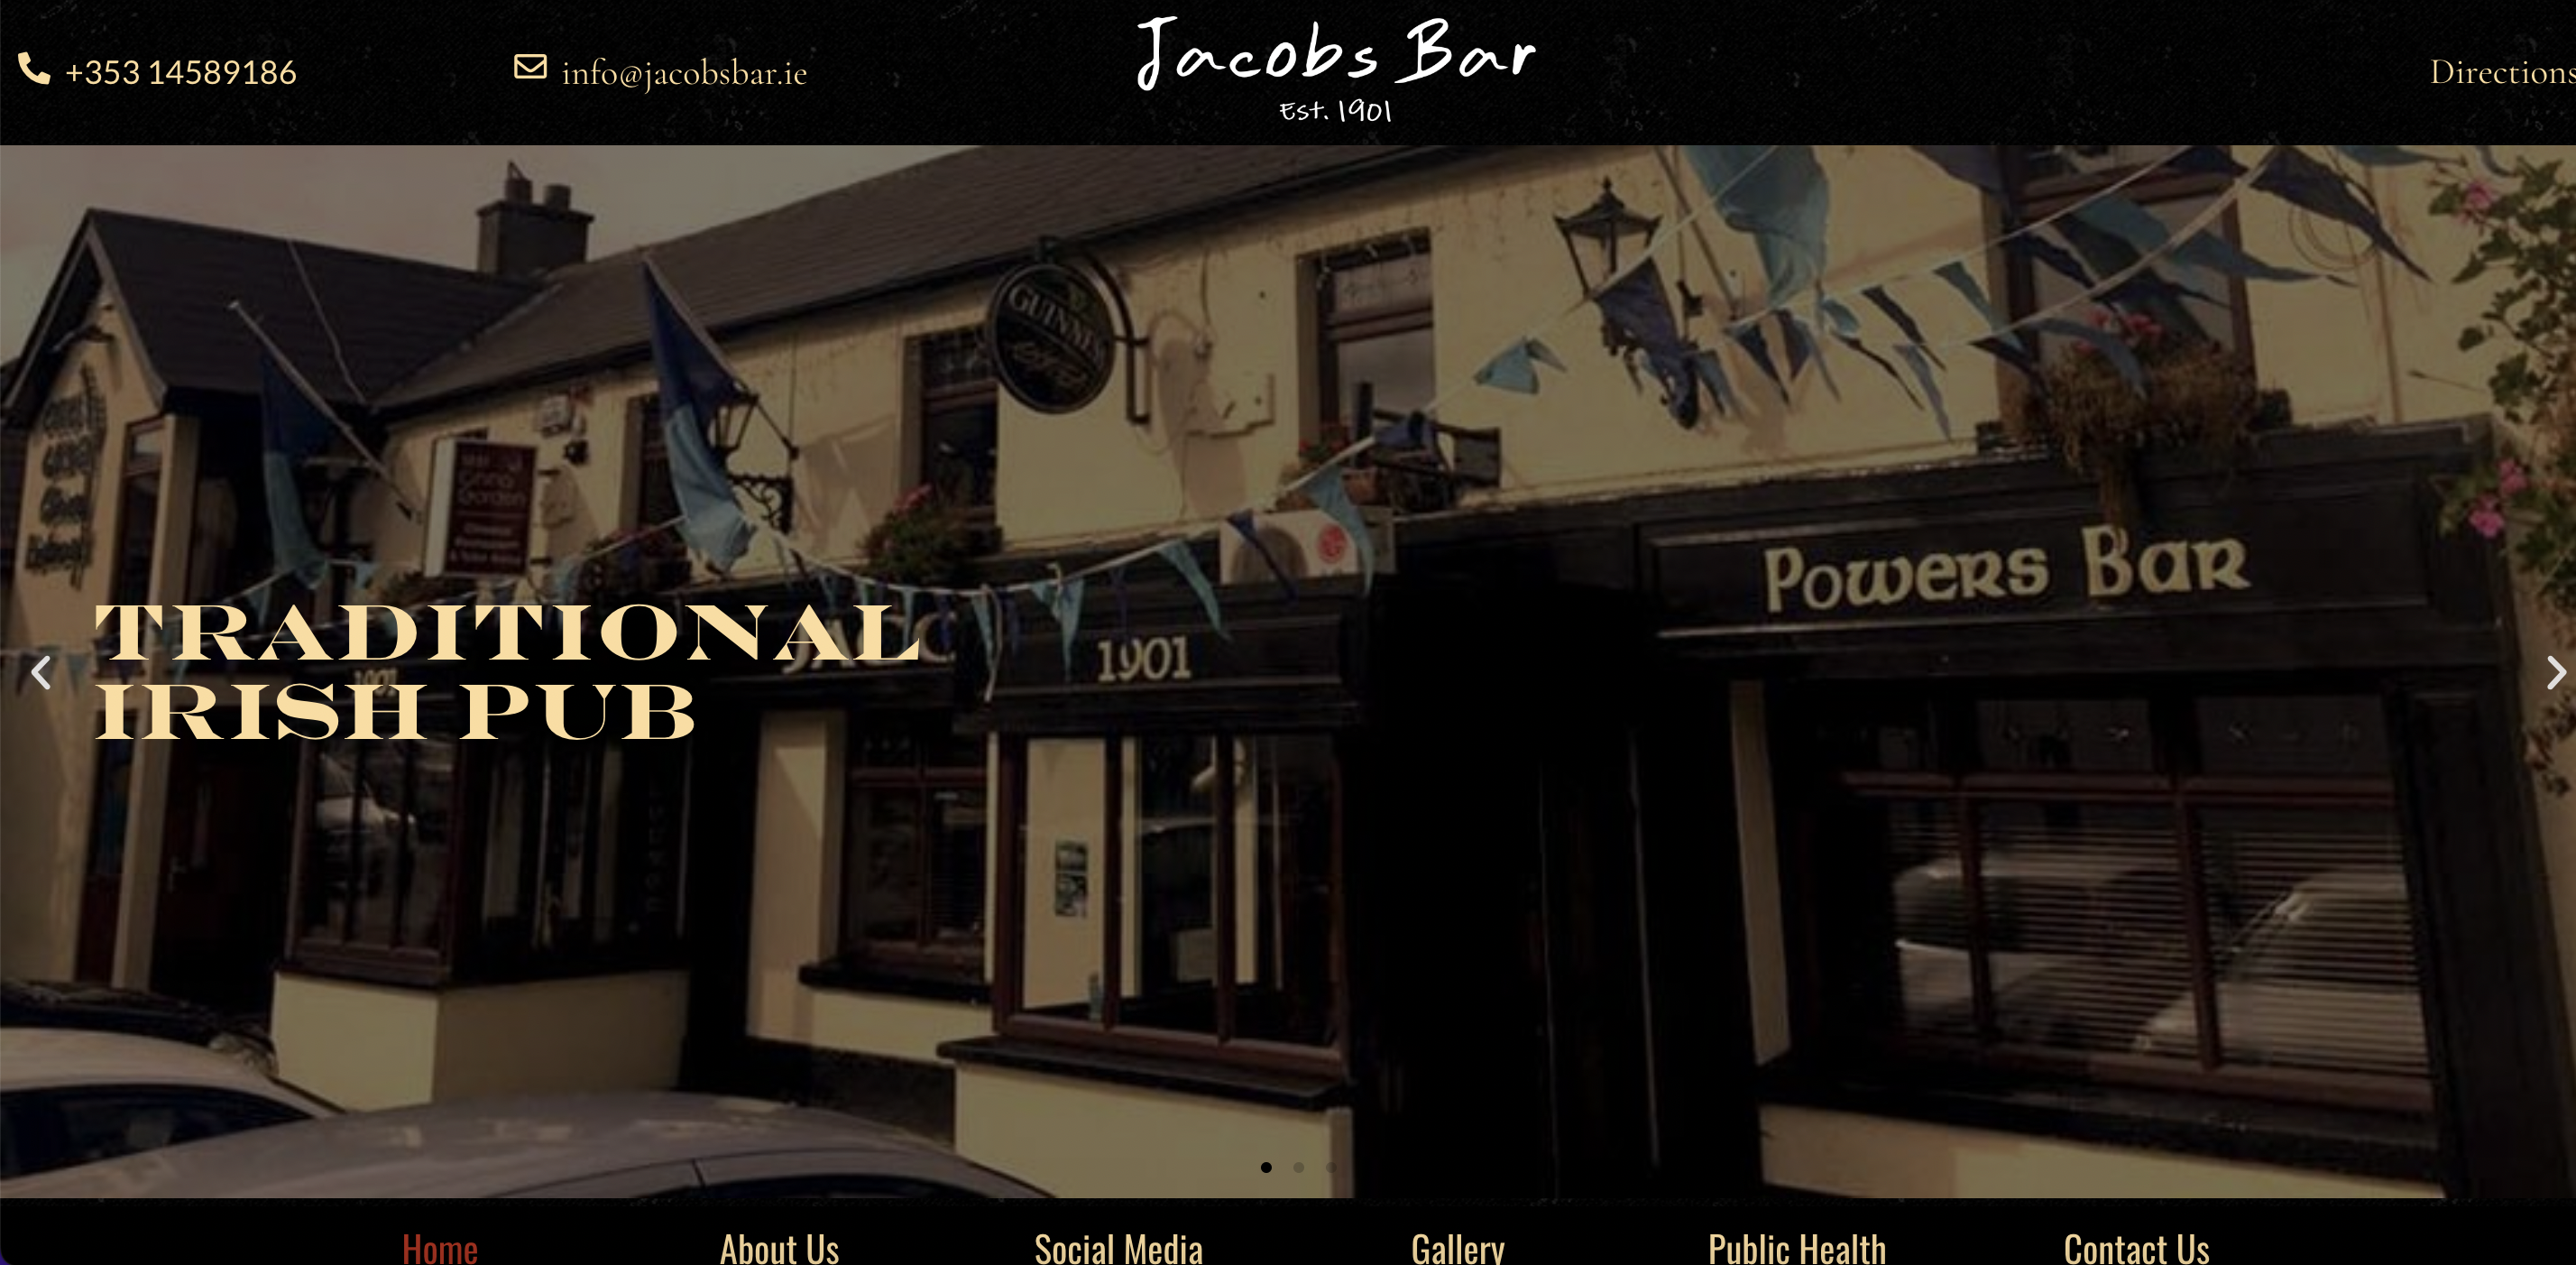 Jacobs Bar Brochure Website developed by DMC Consultancy